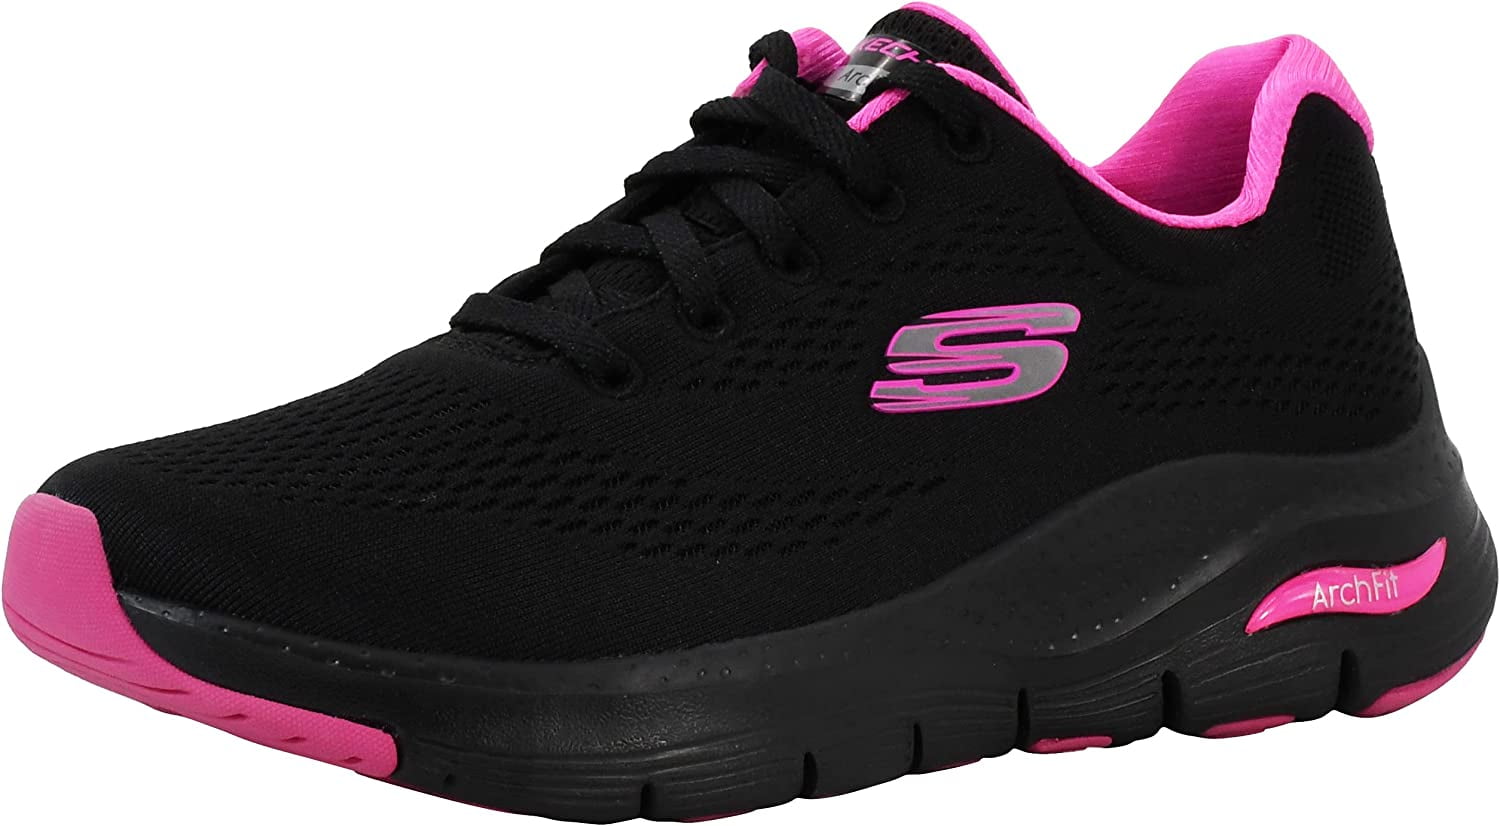 Skechers Women's Arch FIT-Sunny Outlook Black/Hot Pink Sneaker 6.5 M US